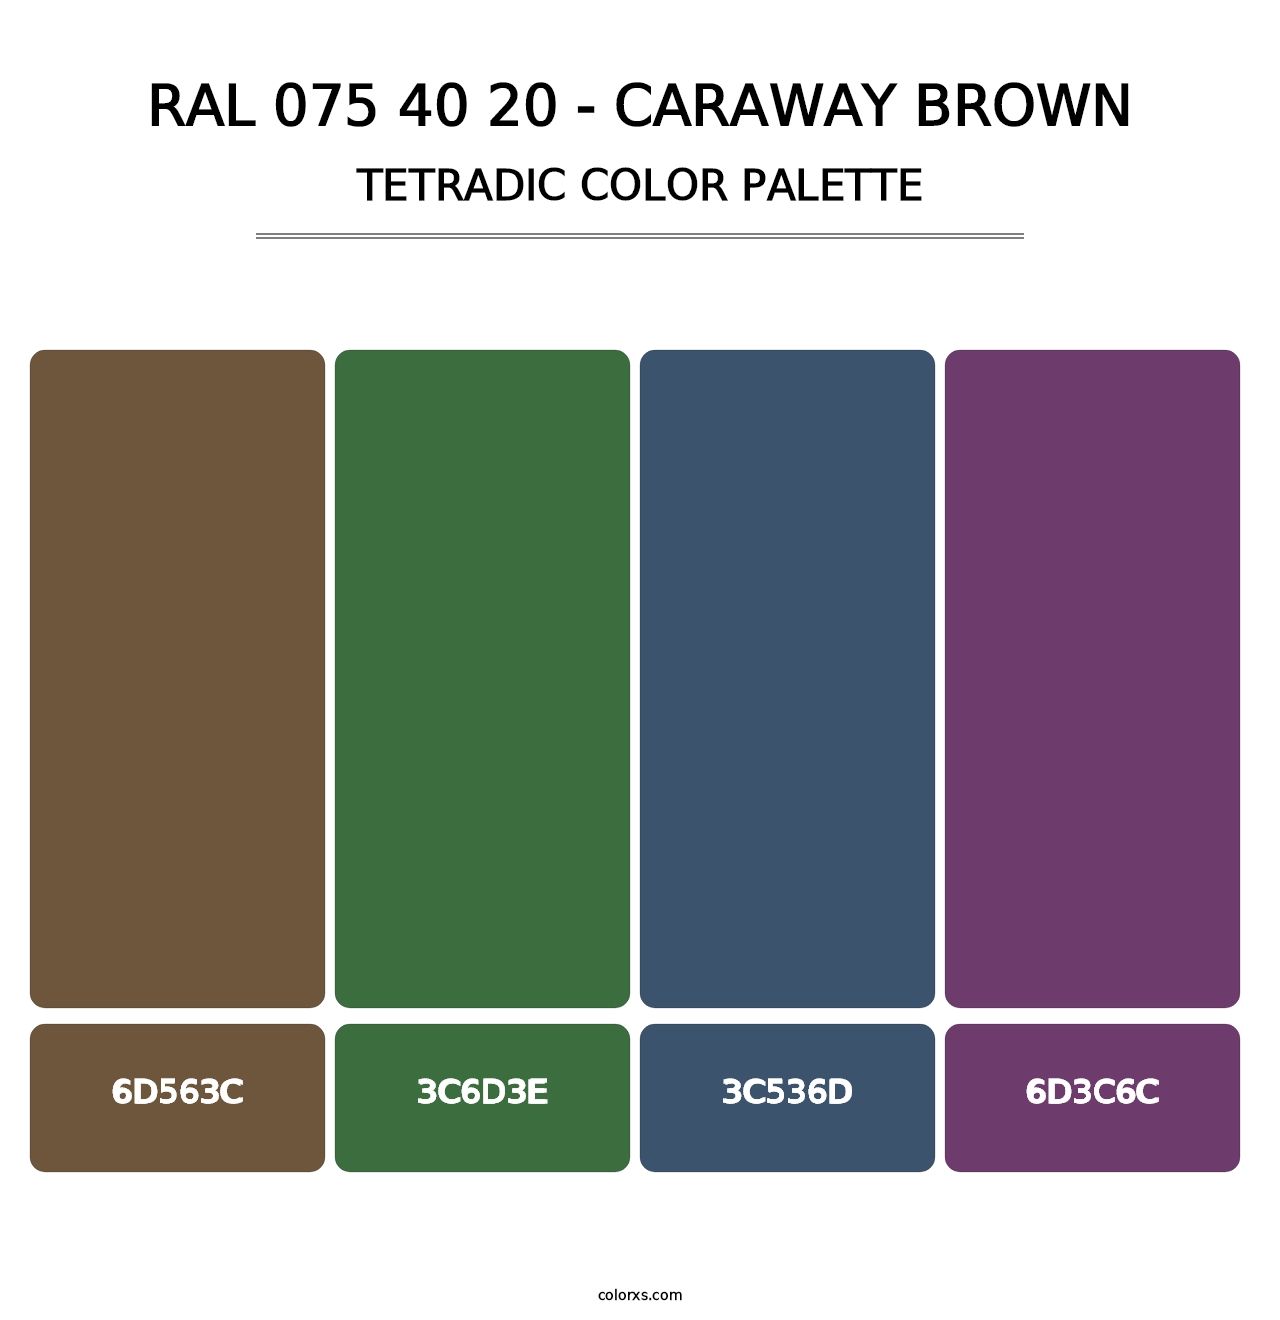 RAL 075 40 20 - Caraway Brown - Tetradic Color Palette